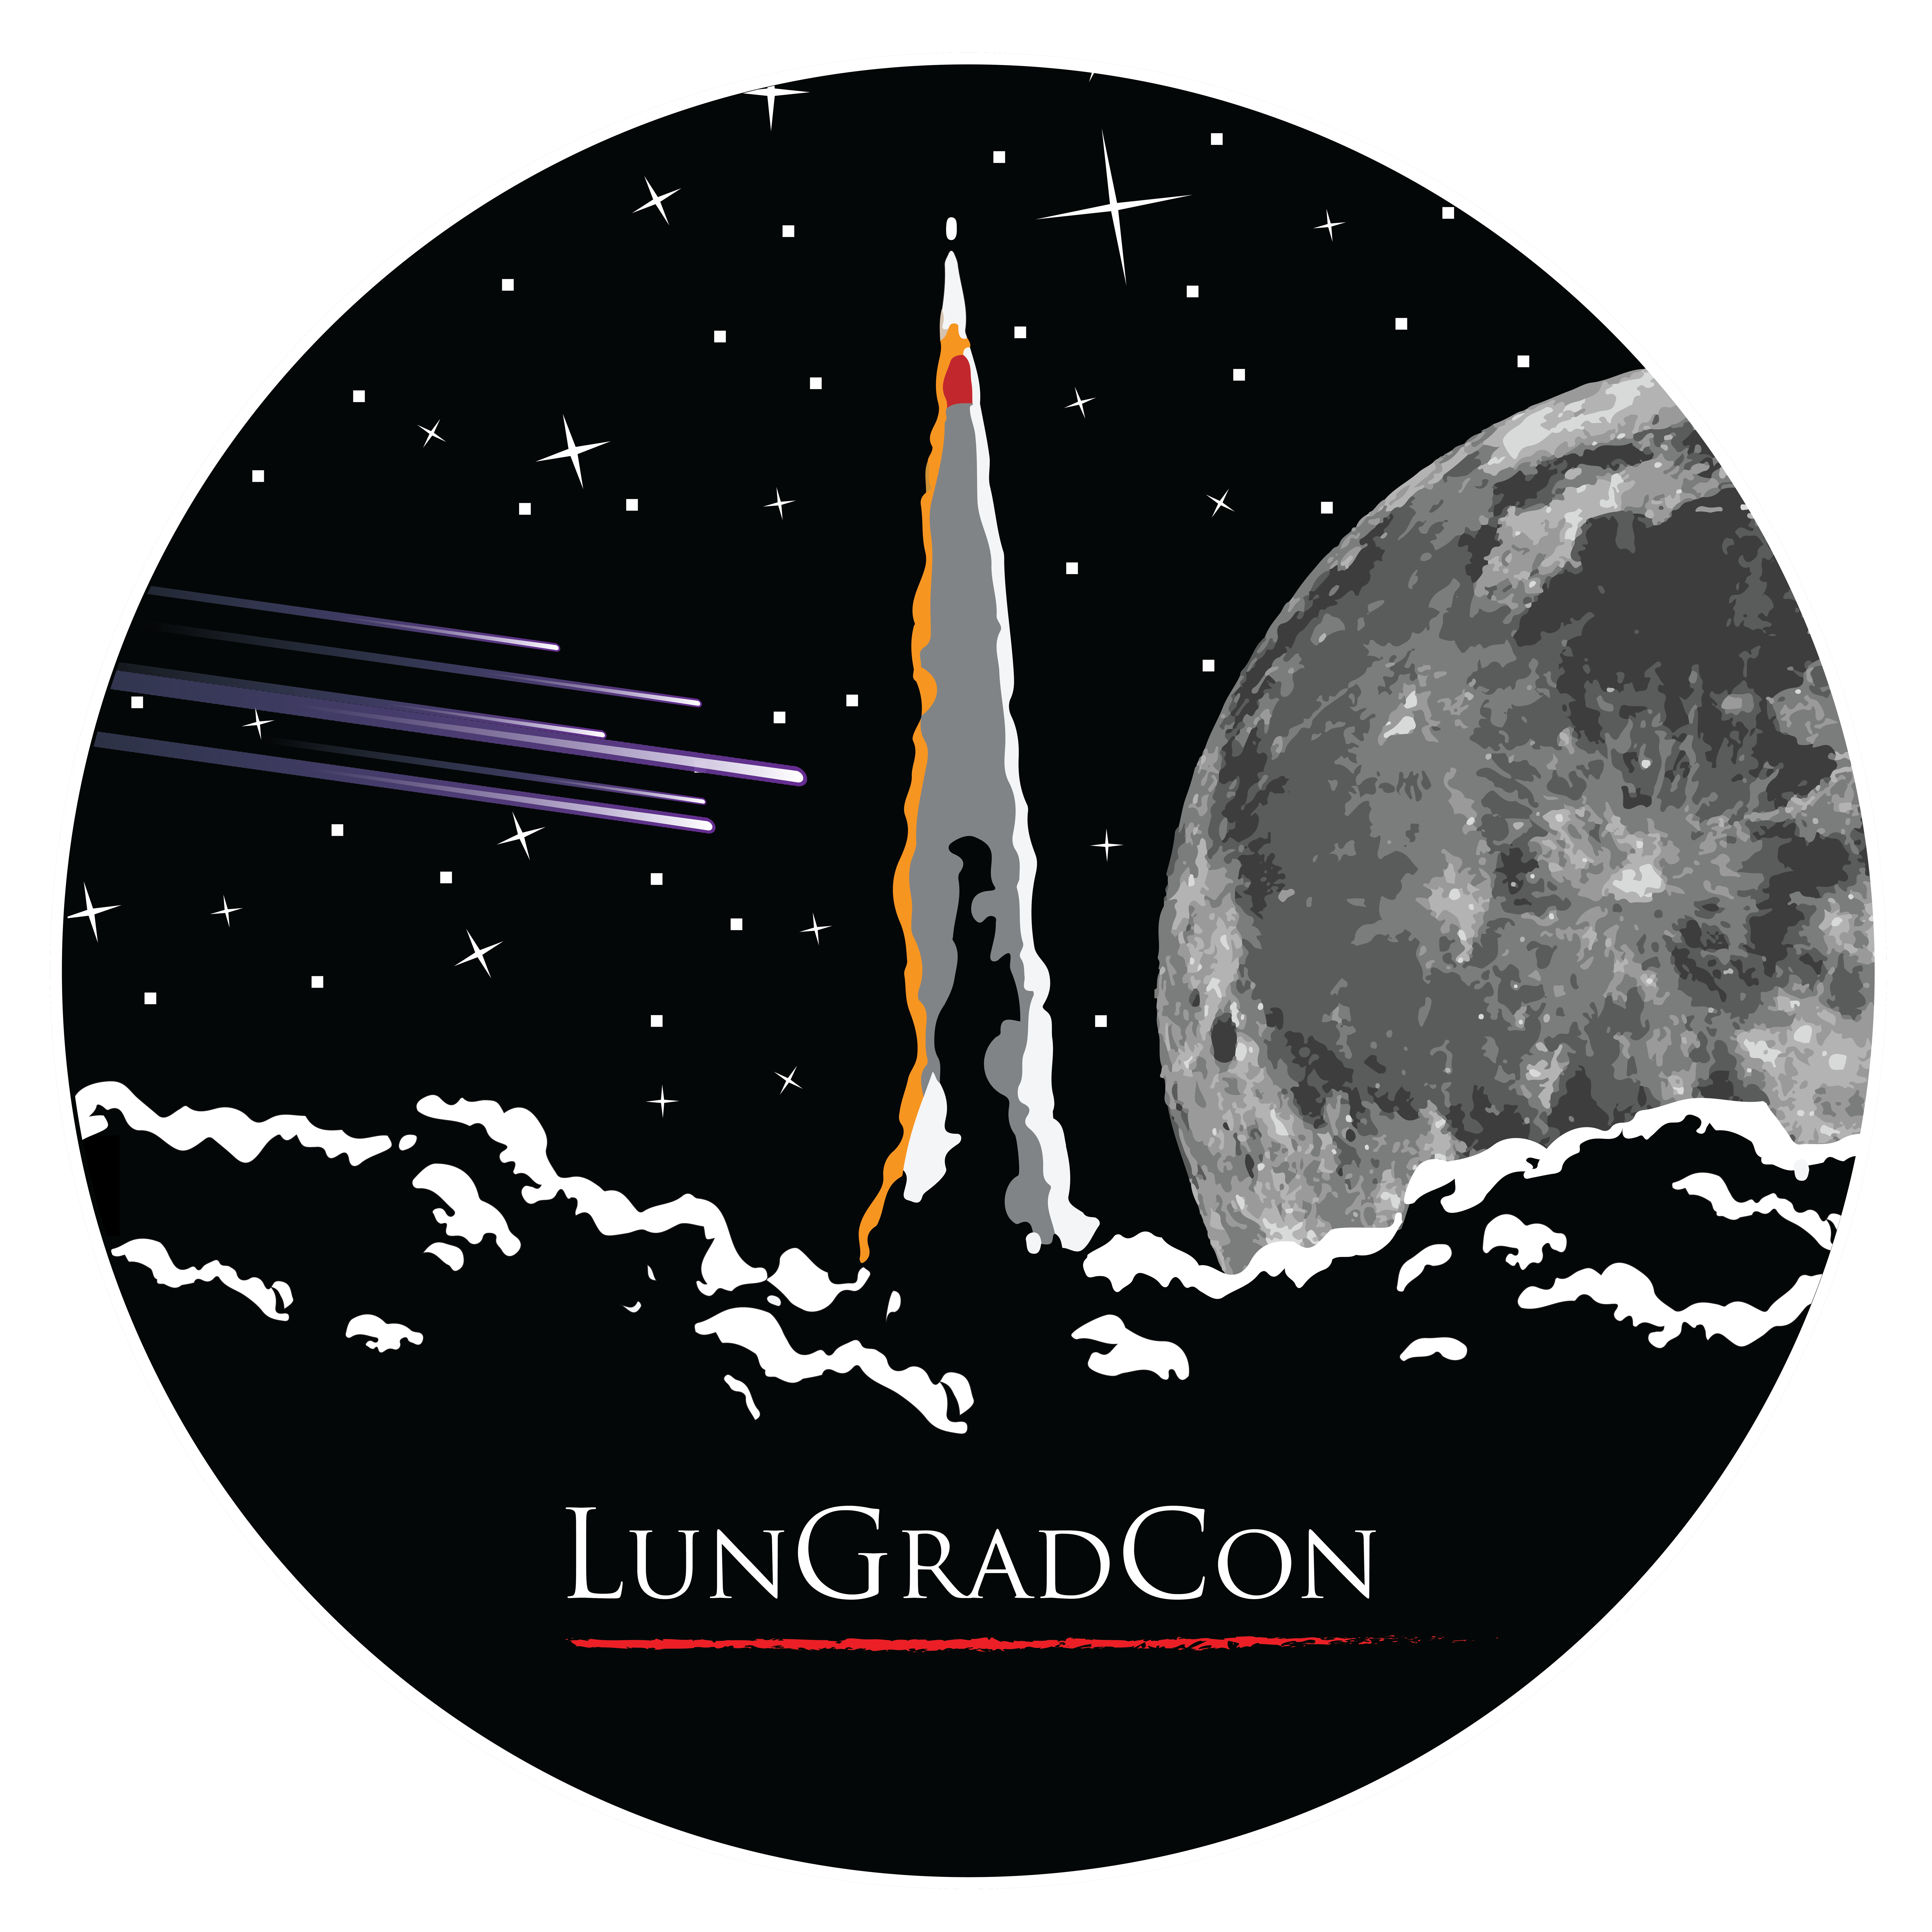 LunGradCon Logo, designed by me